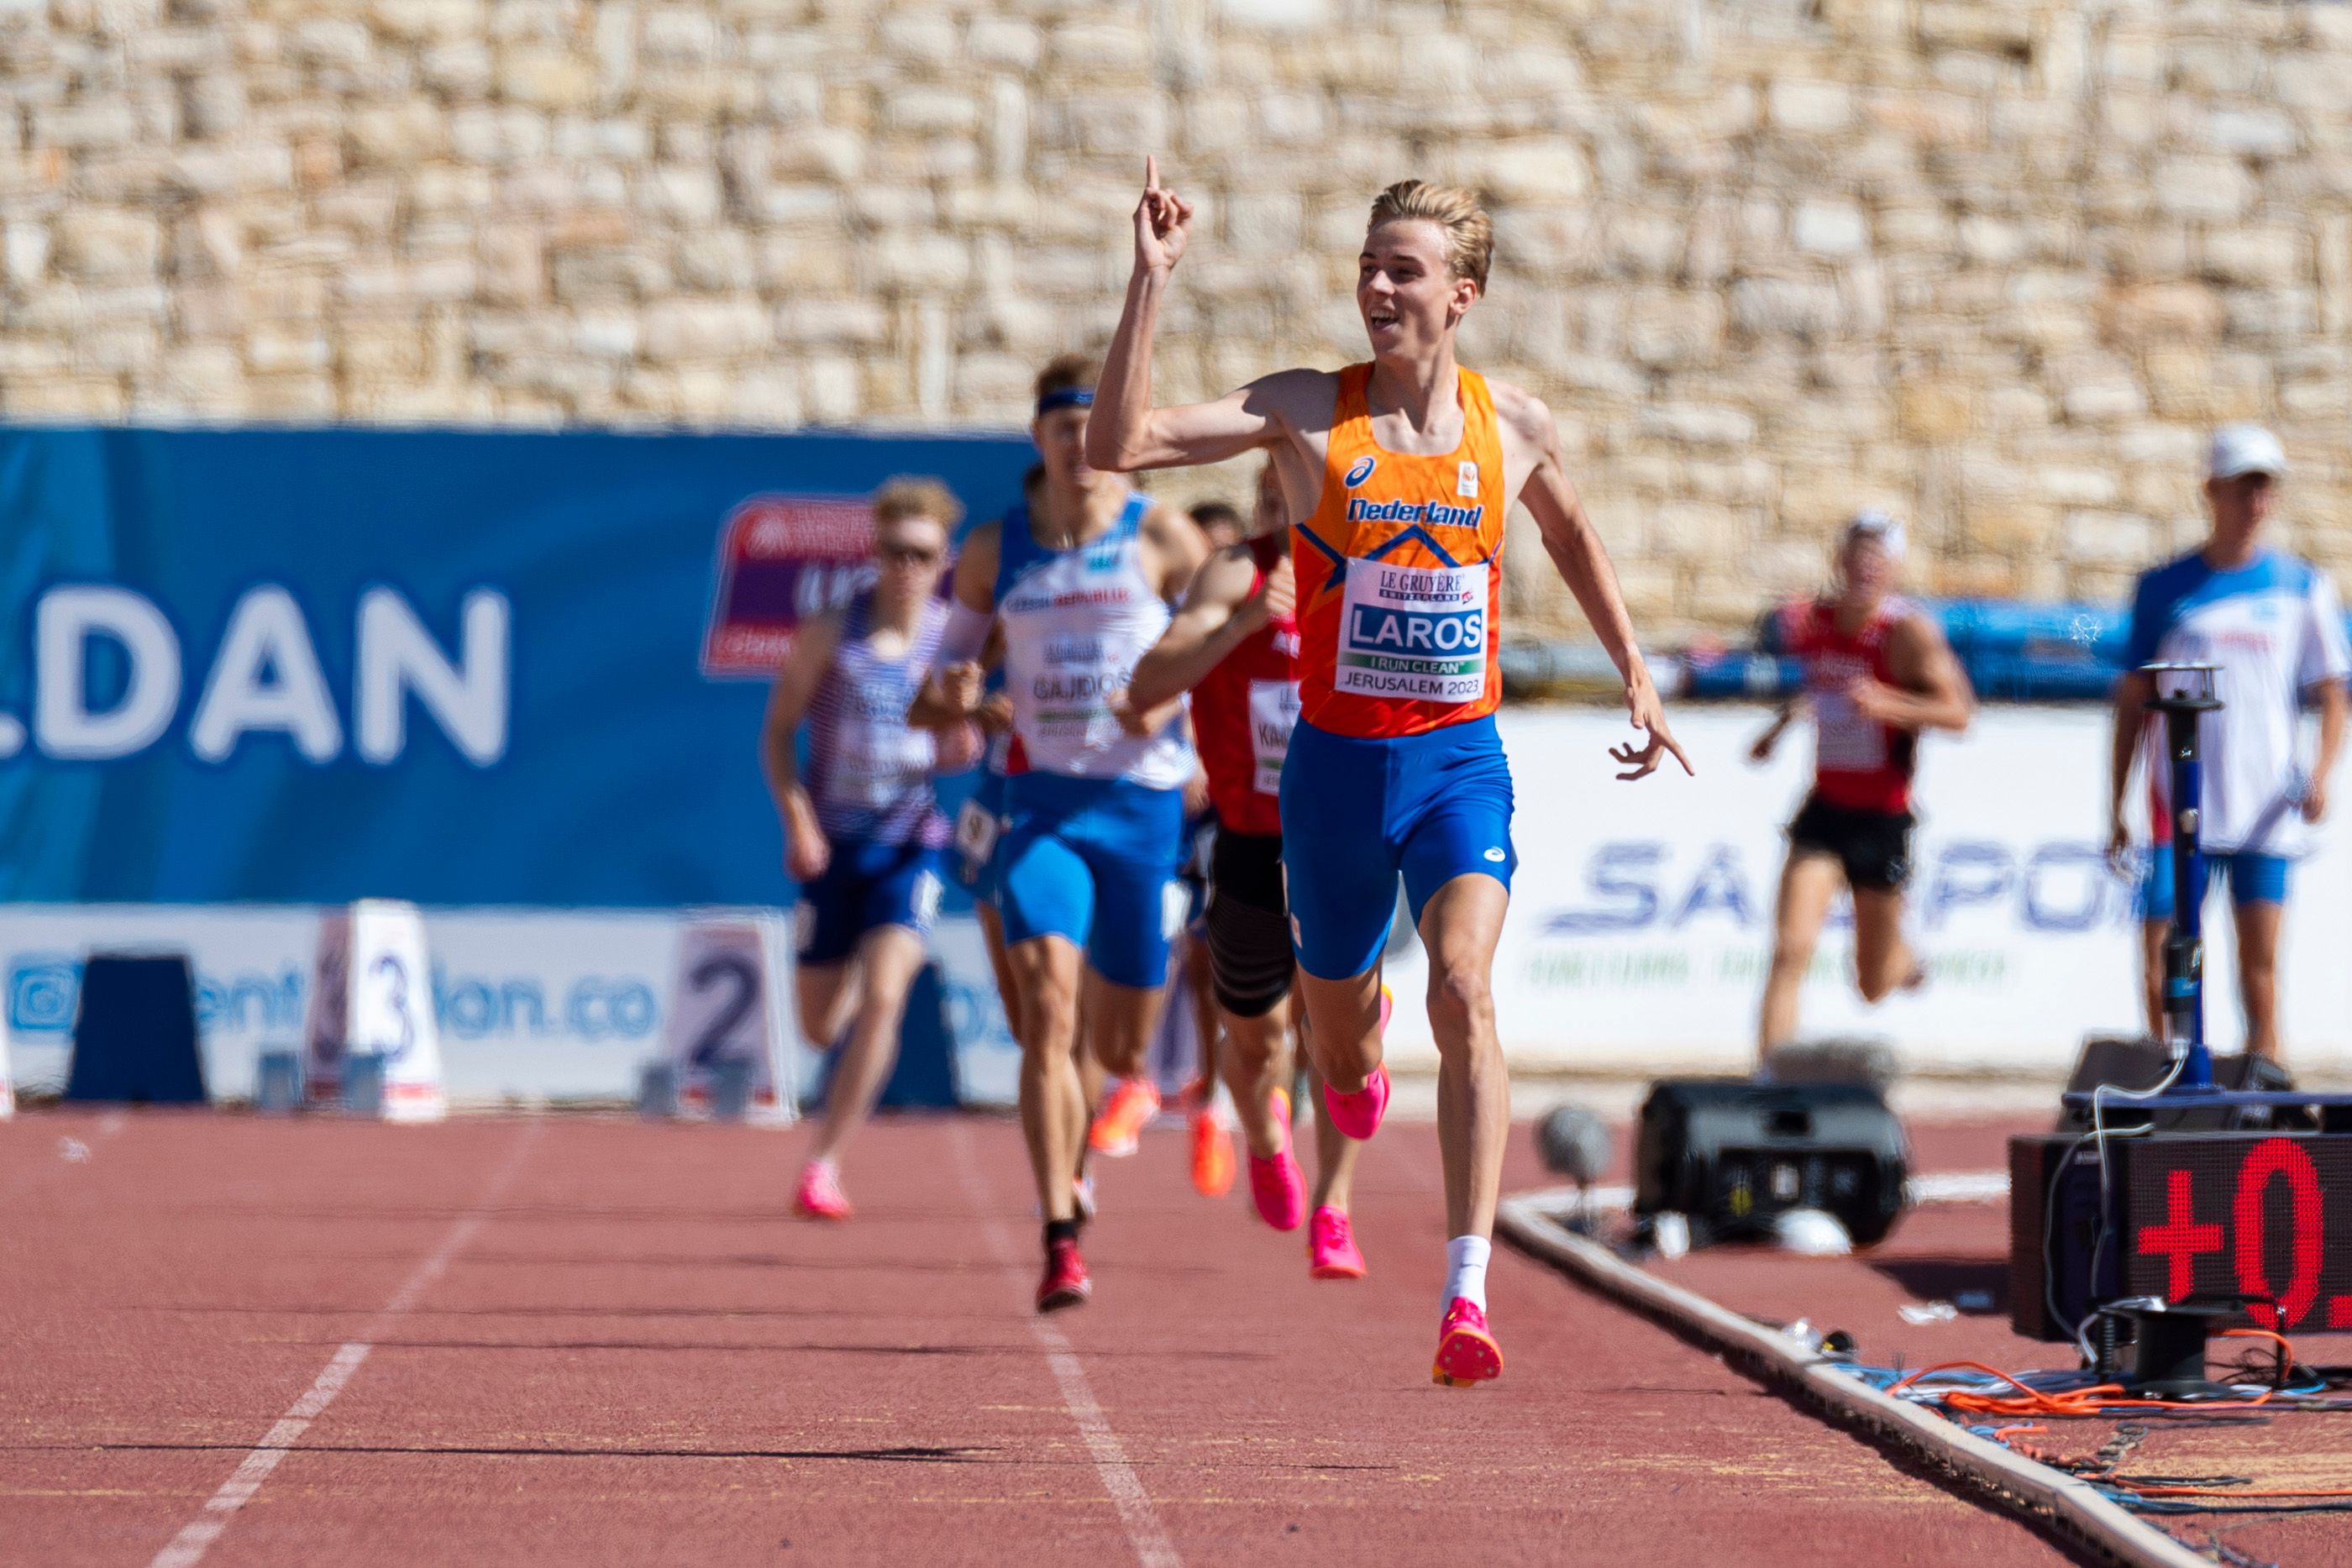 Niels Laros celebrates his 1500m win at the European U20 Championships in Jerusalem